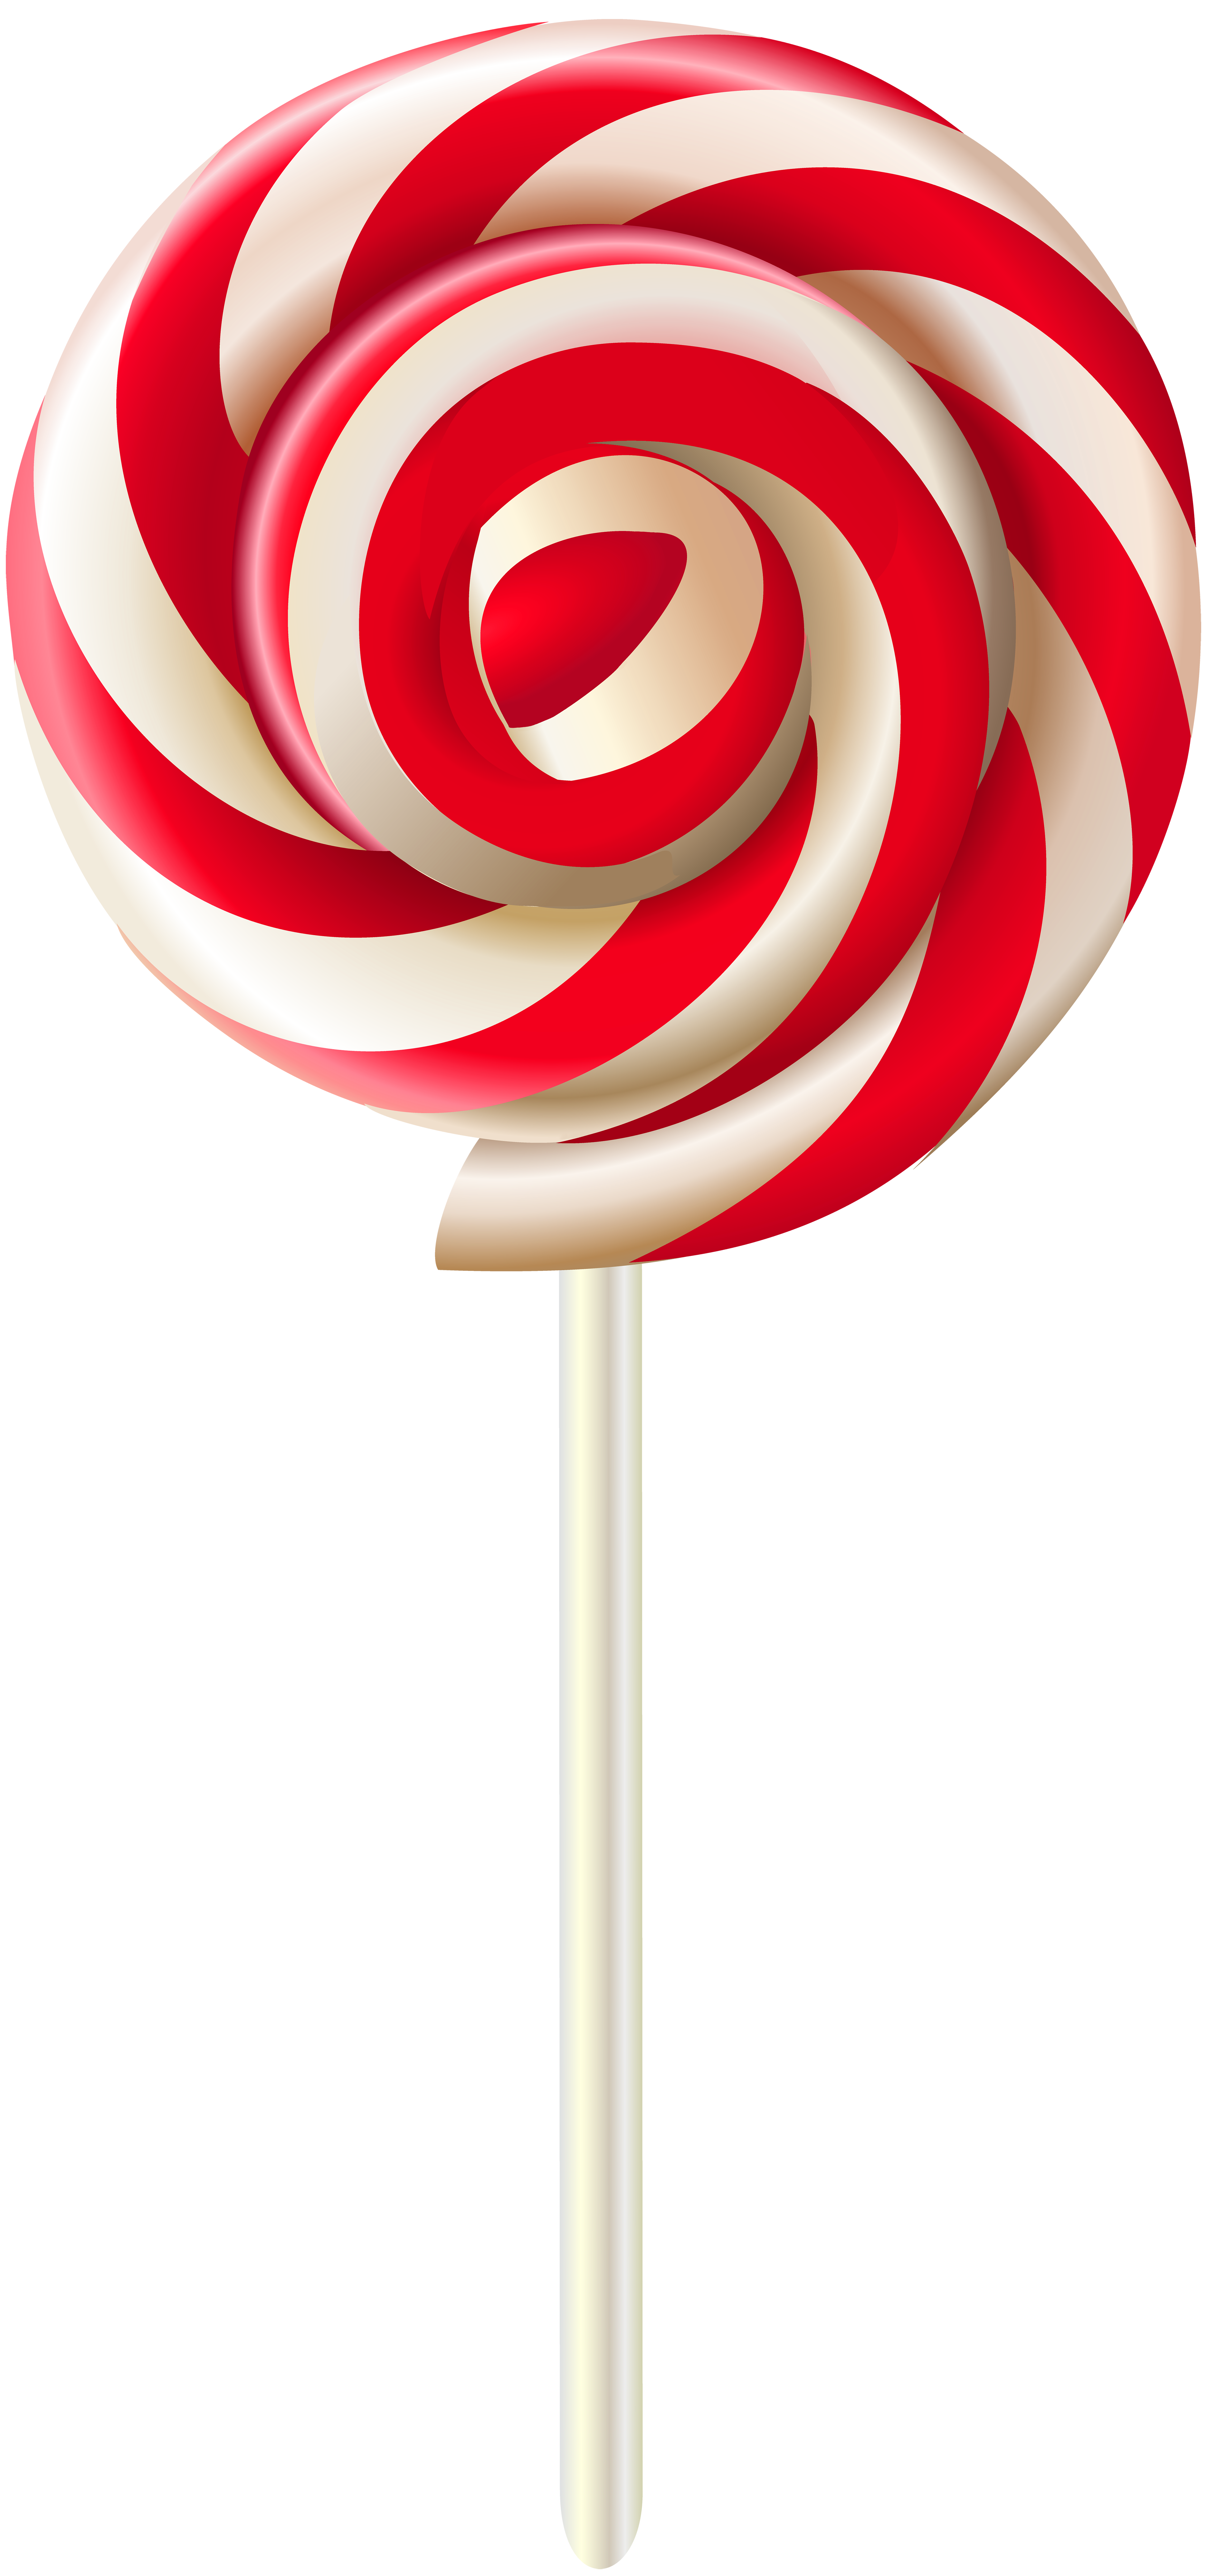 Lollipop clipart clip art. Red swirl transparent png